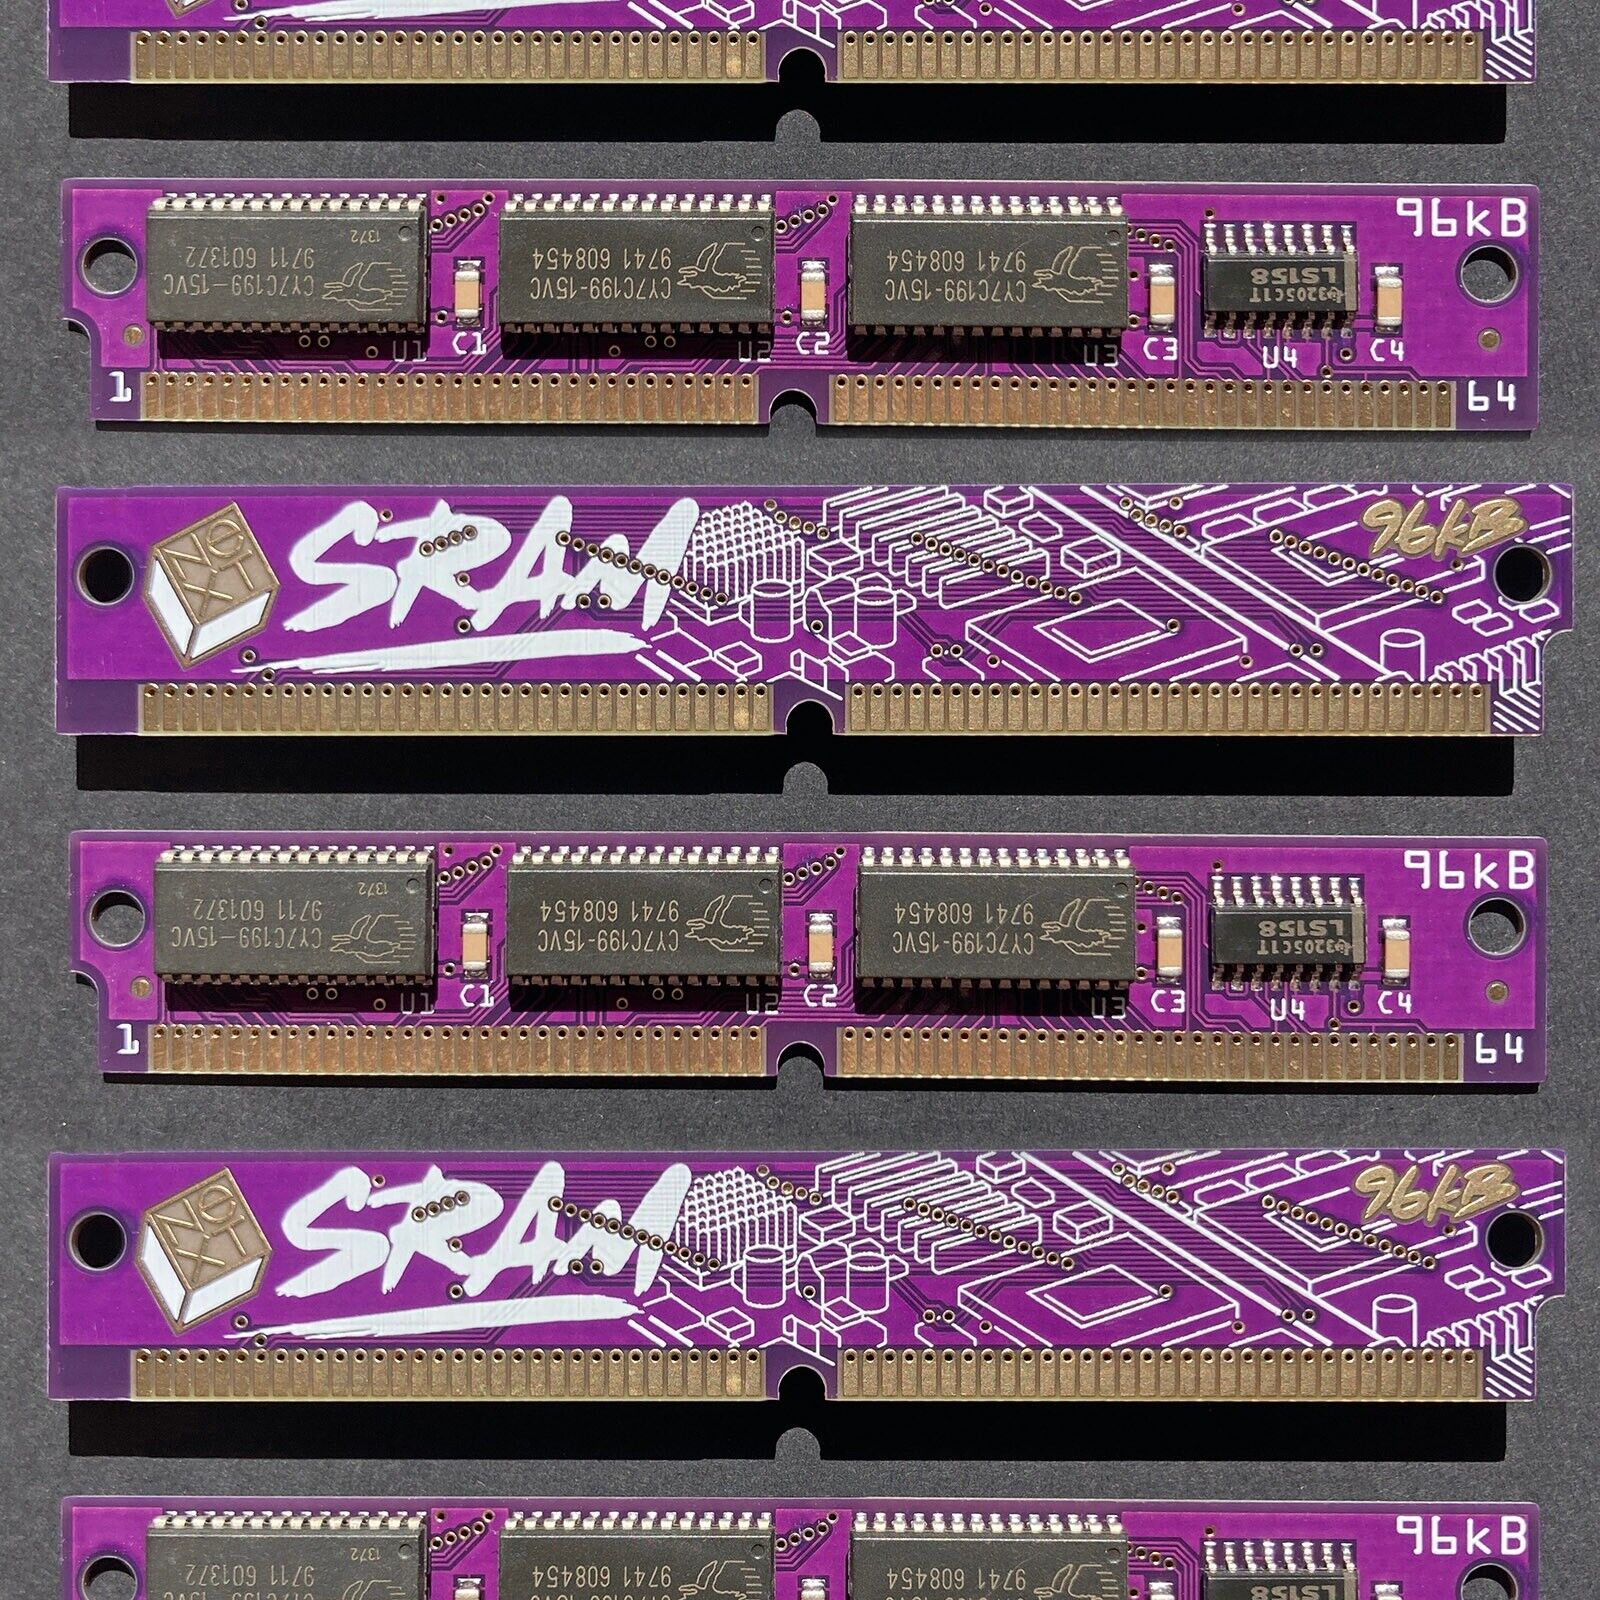 1pcs PurpleRAM new 64pin SIMM 96kB DSP SRAM memory NeXT computer 